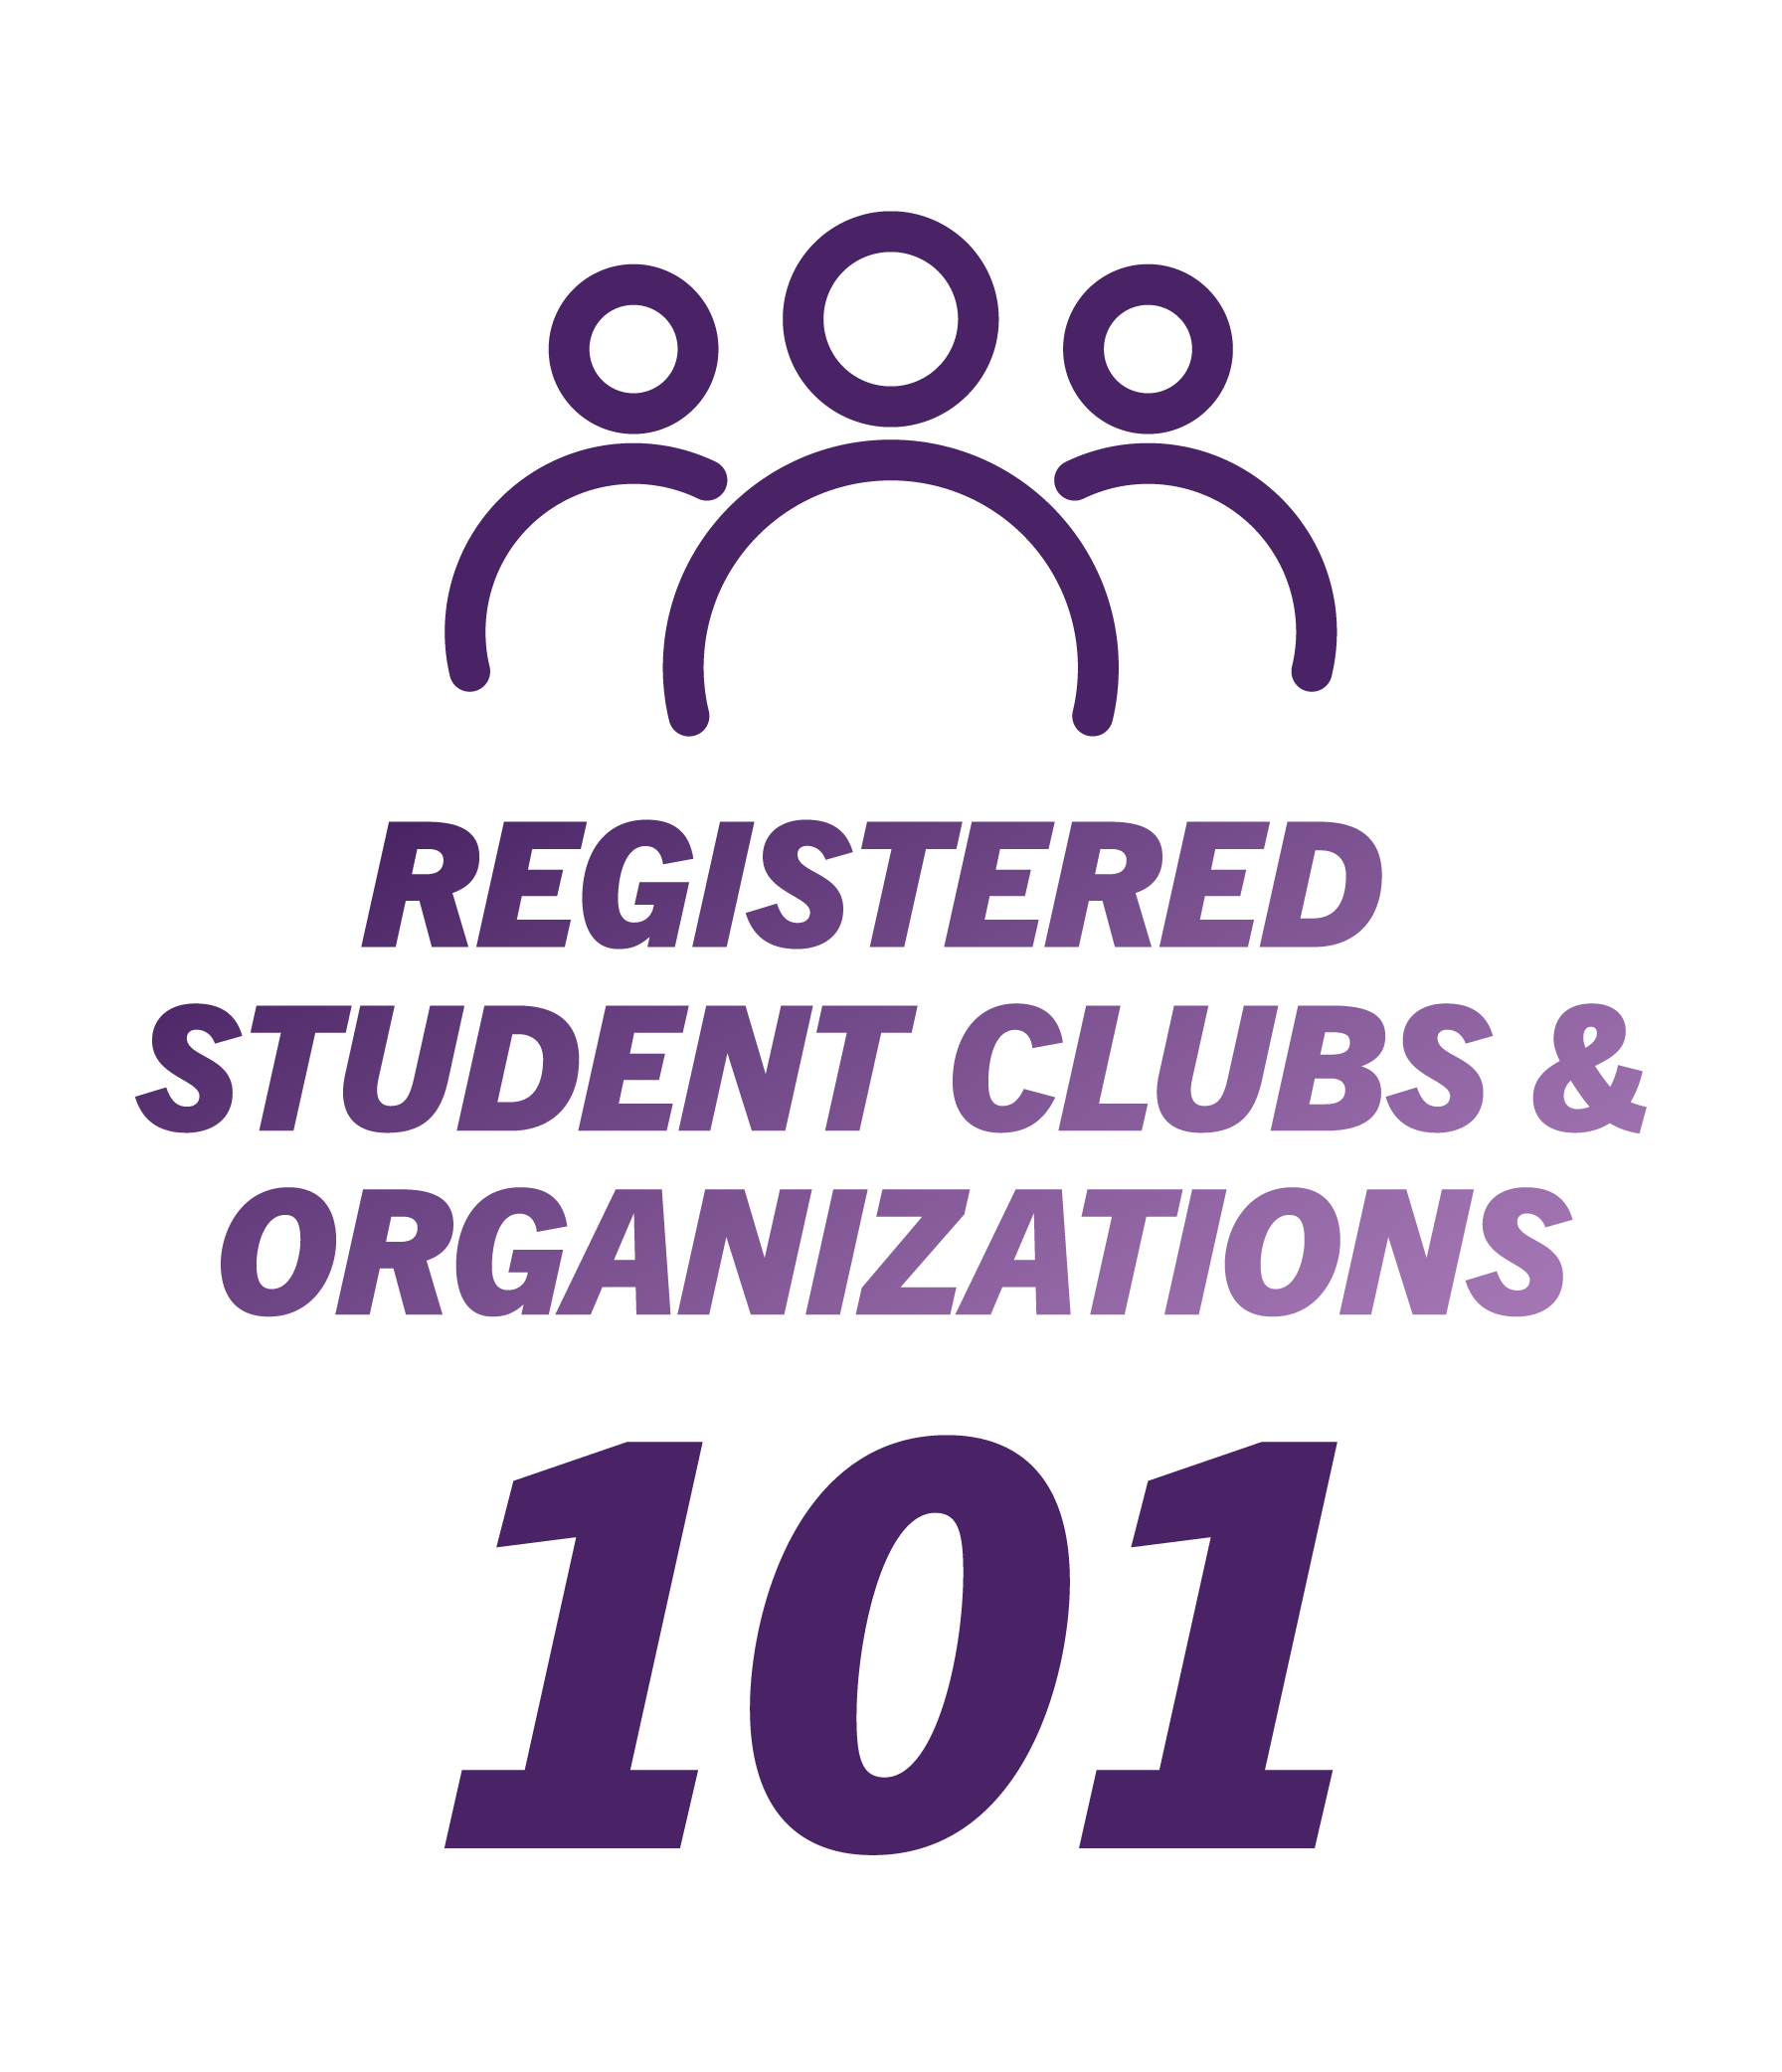 WSU has 101 registered student clubs & organizations 